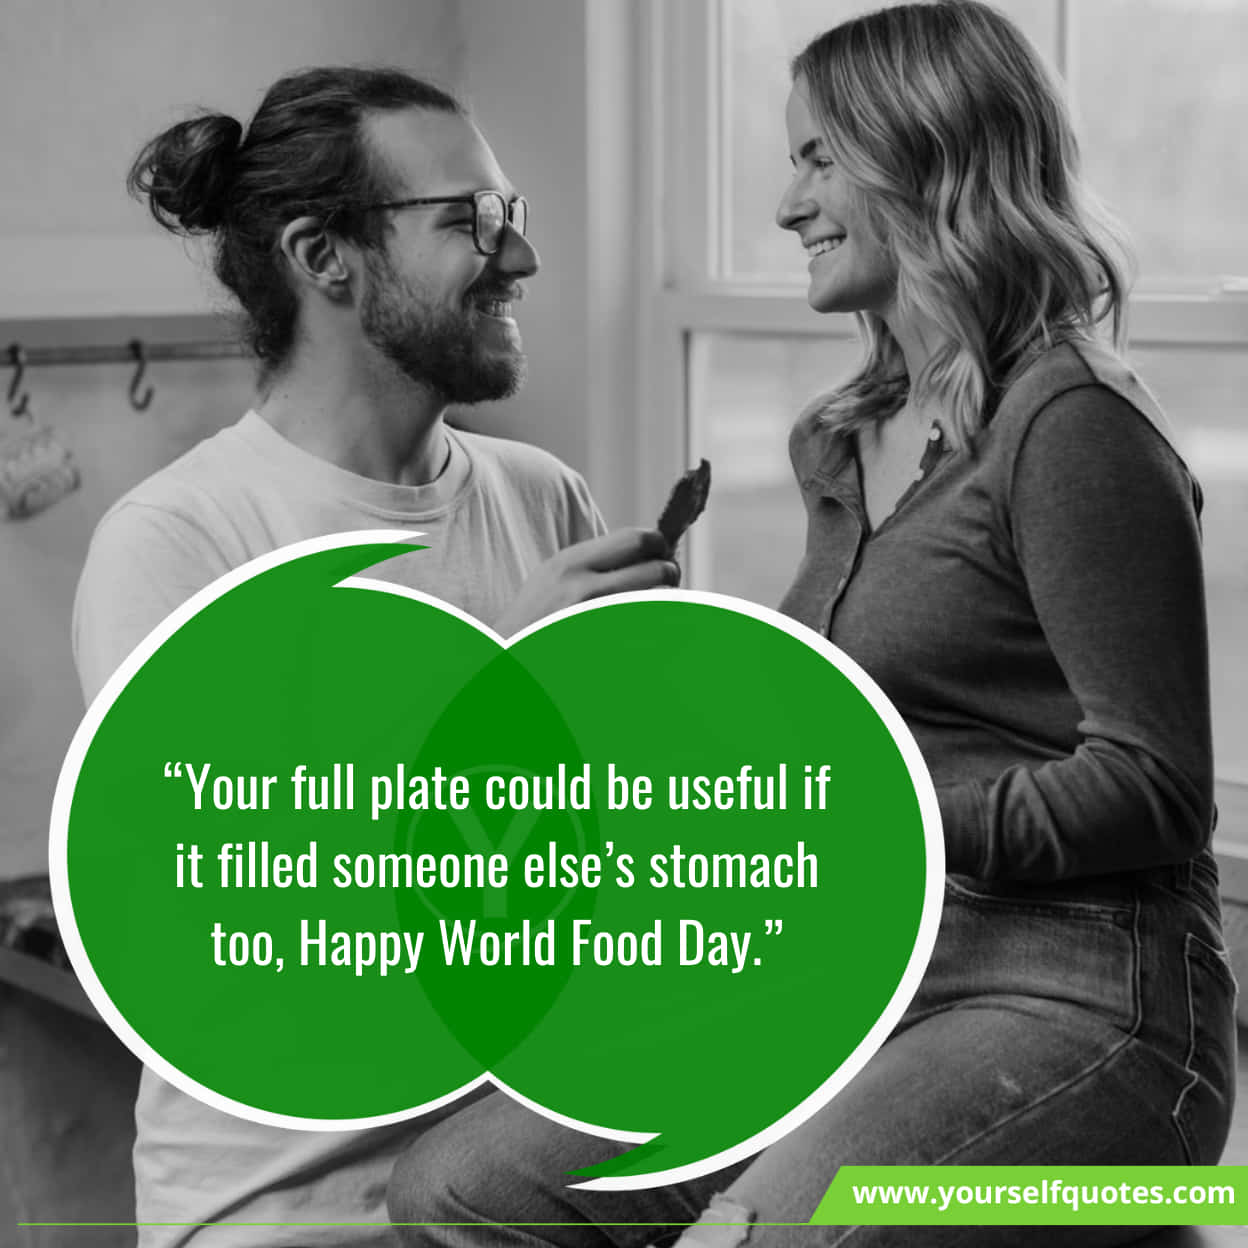 World Food Day Sayings & Greetings